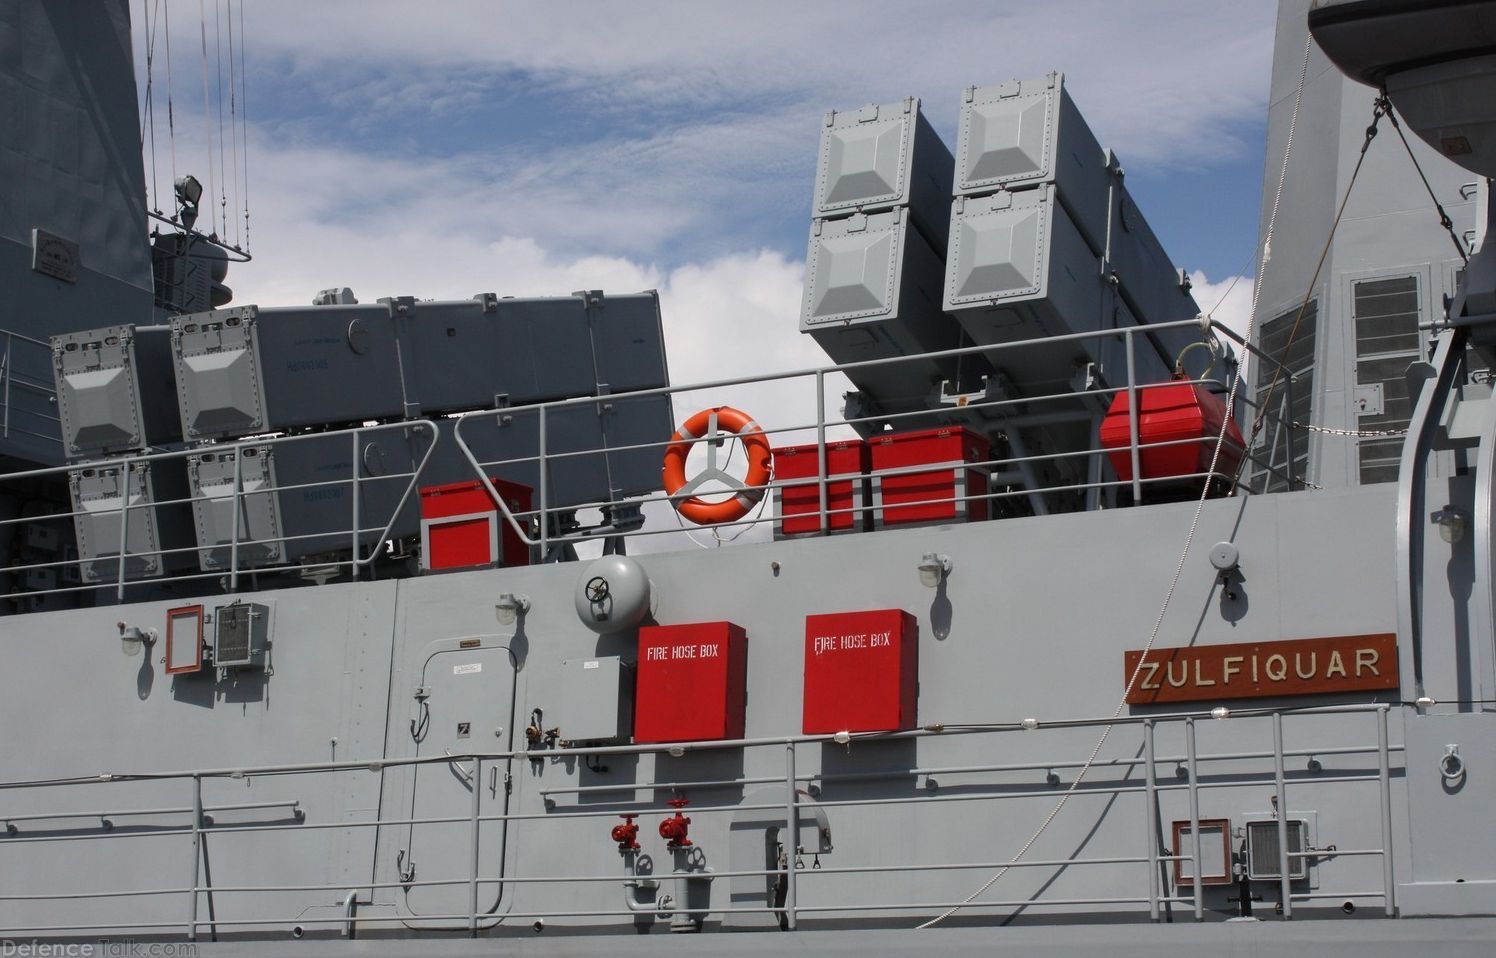 C-802 anti ship missile onboard PNS Zulfiqar